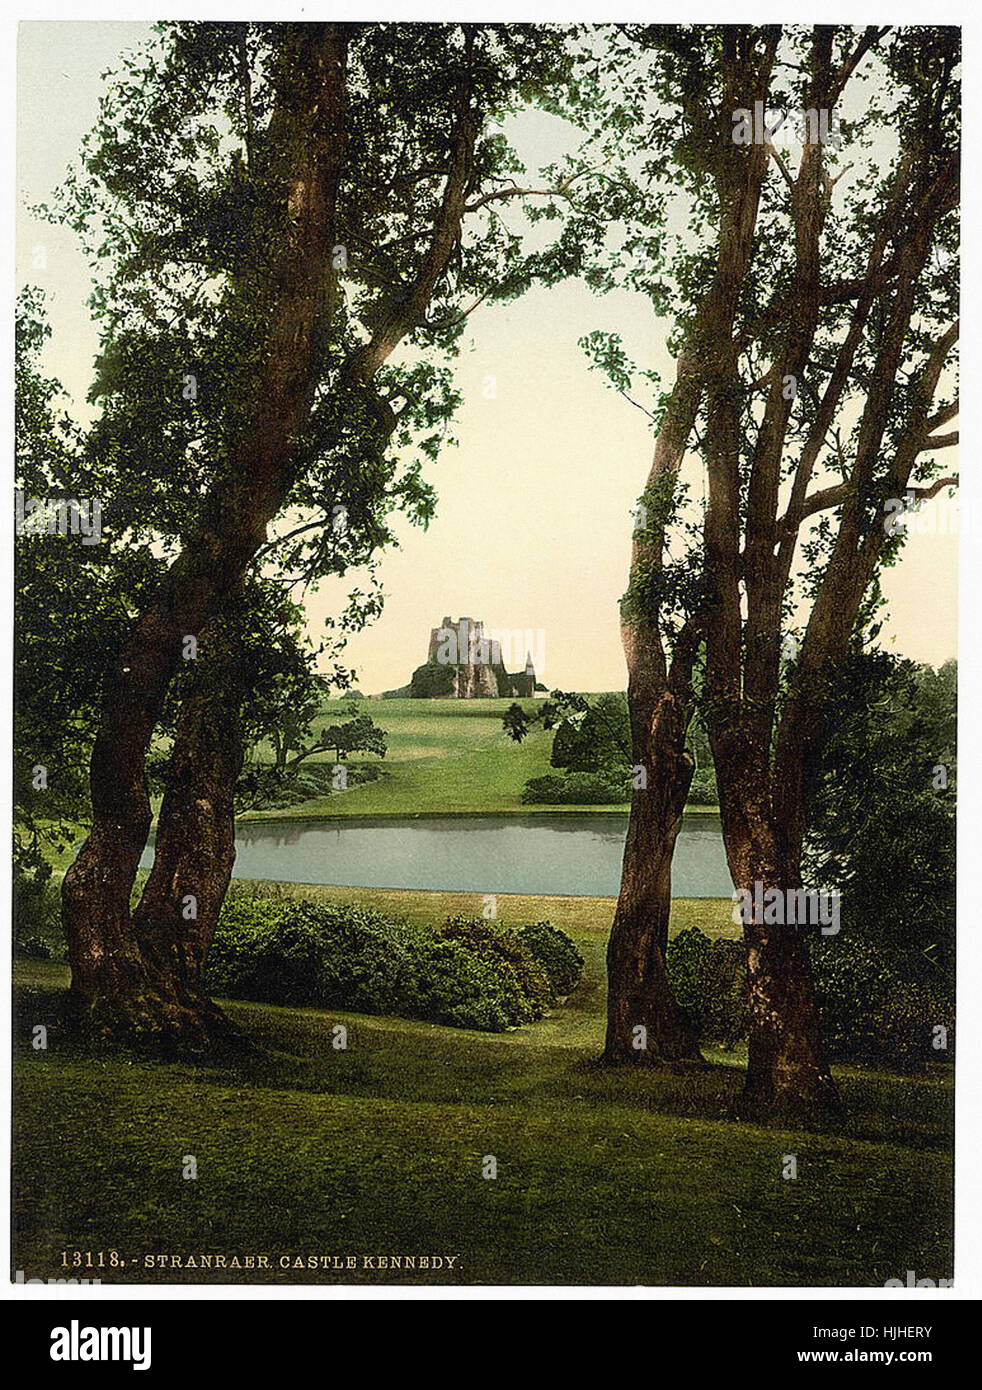 Castle Kennedy, Stranraer, Scotland  - Photochrom XIXth century Stock Photo